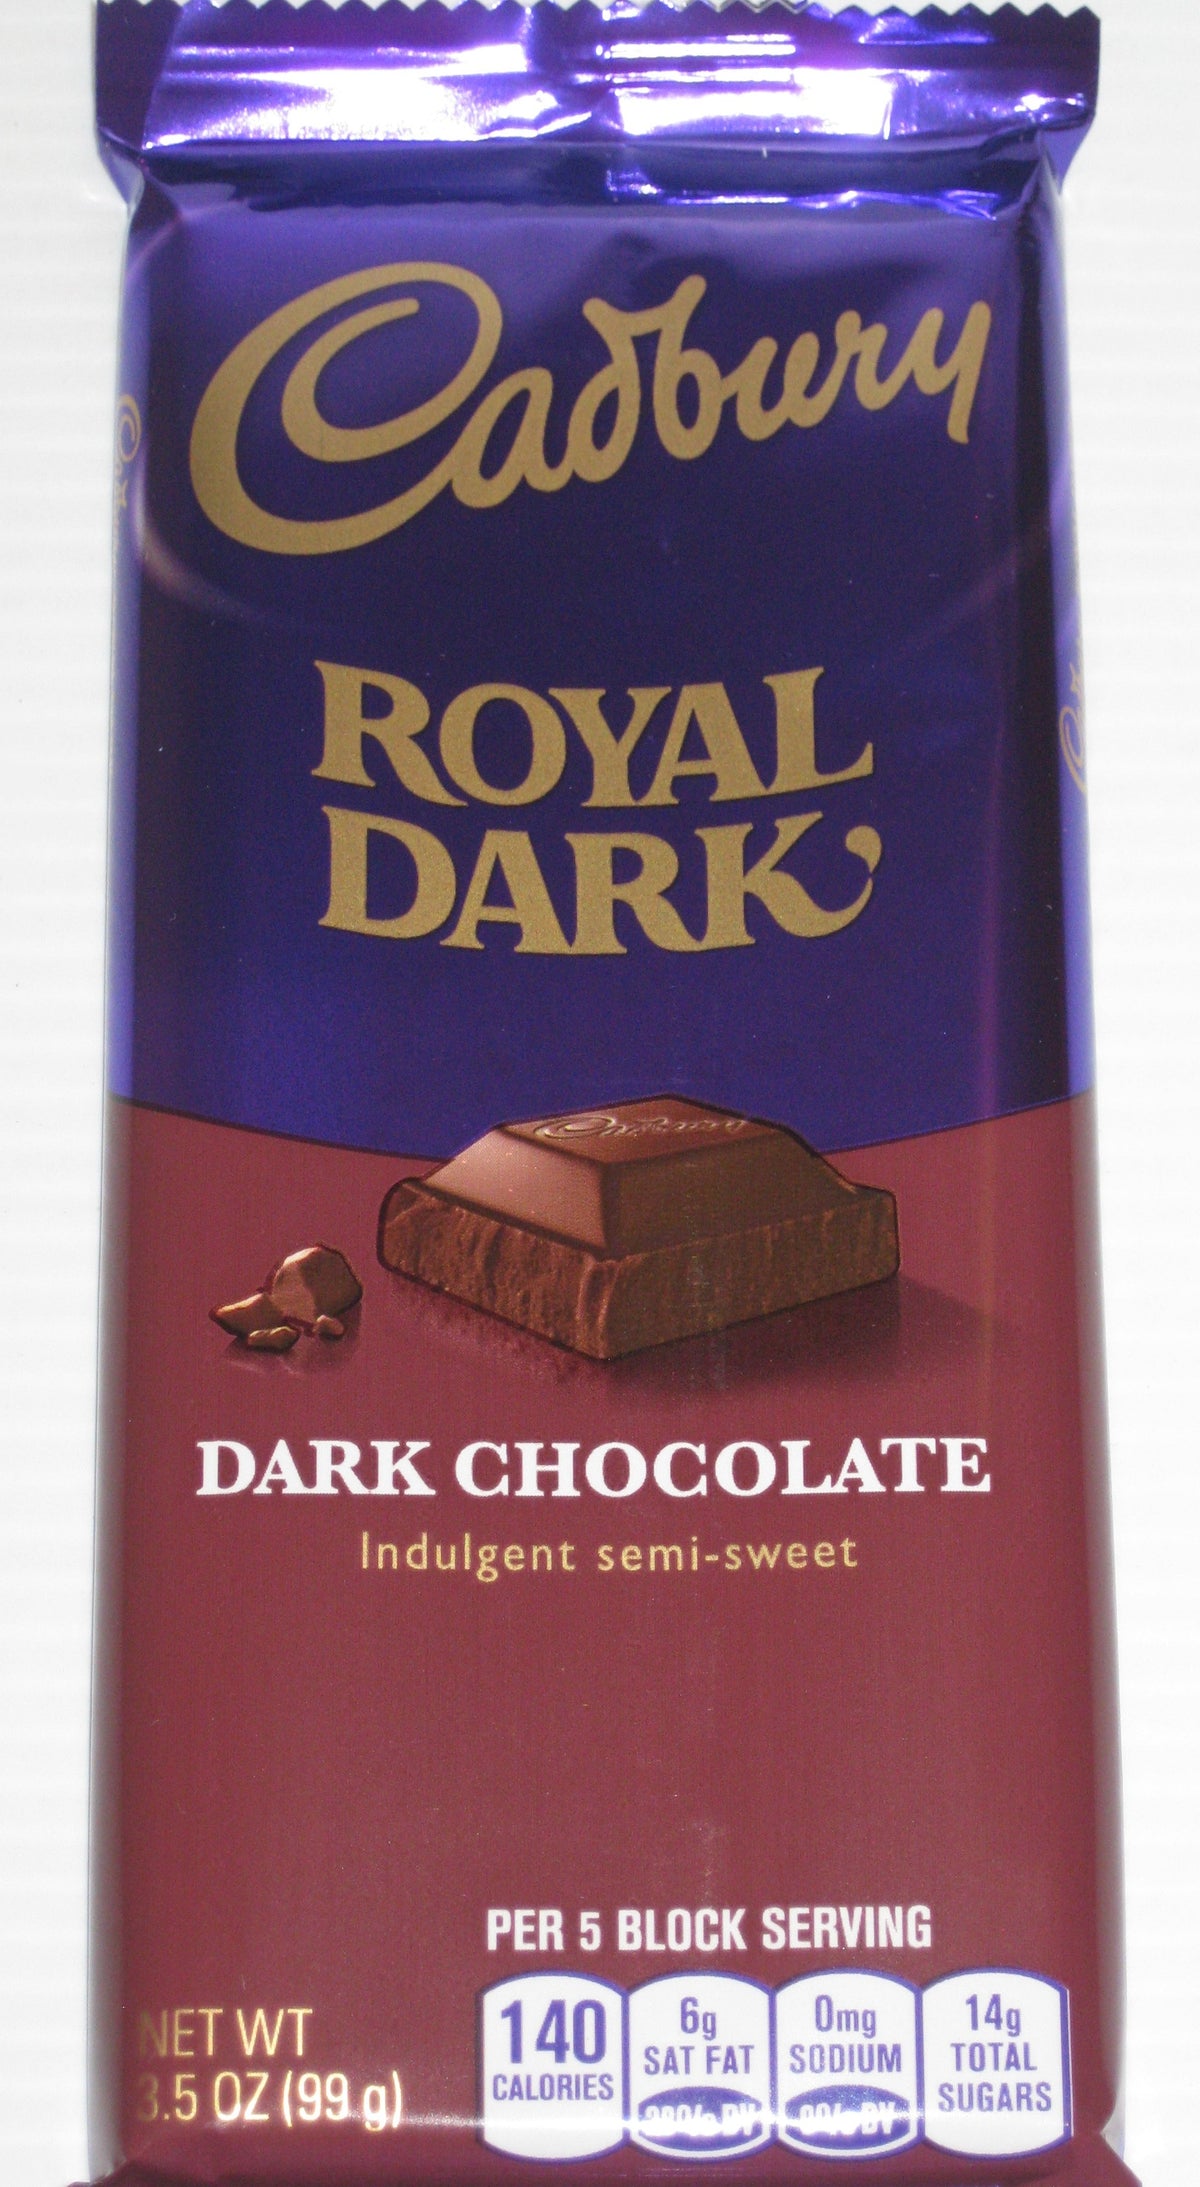 Cadbury Royal Dark Chocolate 3.5oz bar